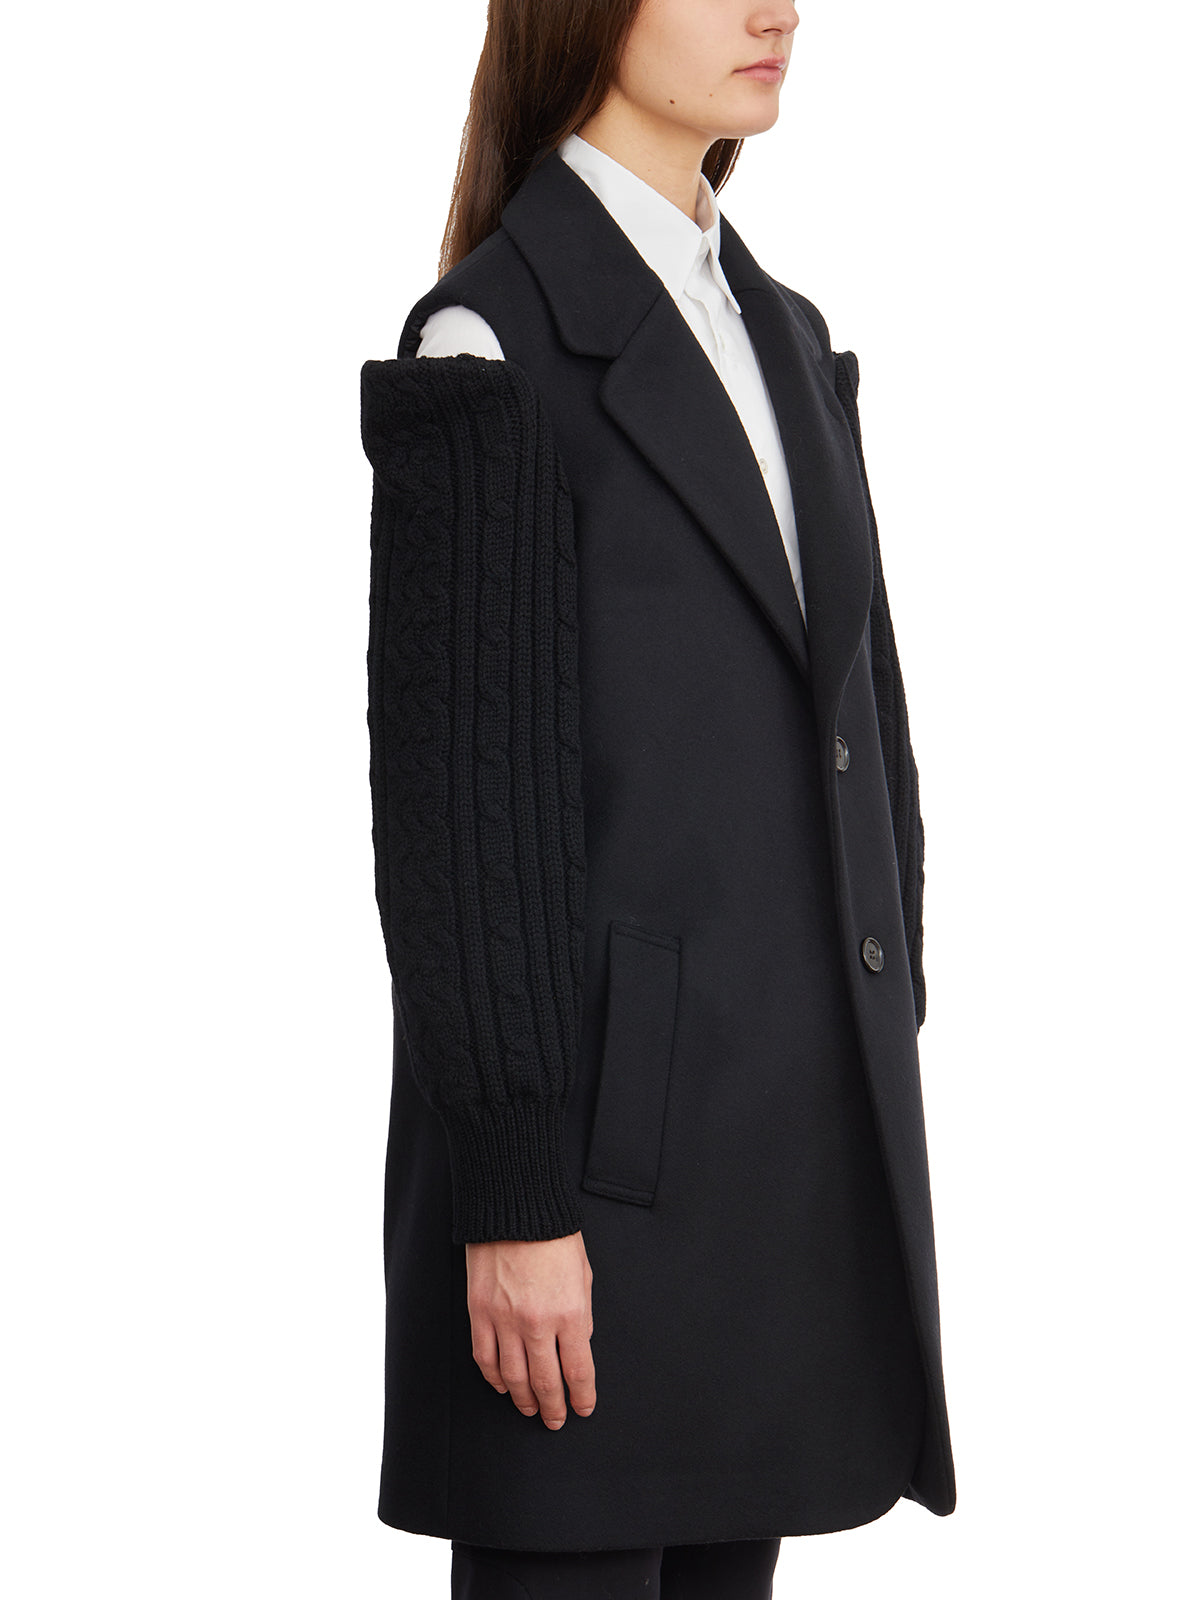 COMME DES GARÇONS Black Wool Jacket with Open Shoulder and Front Pockets